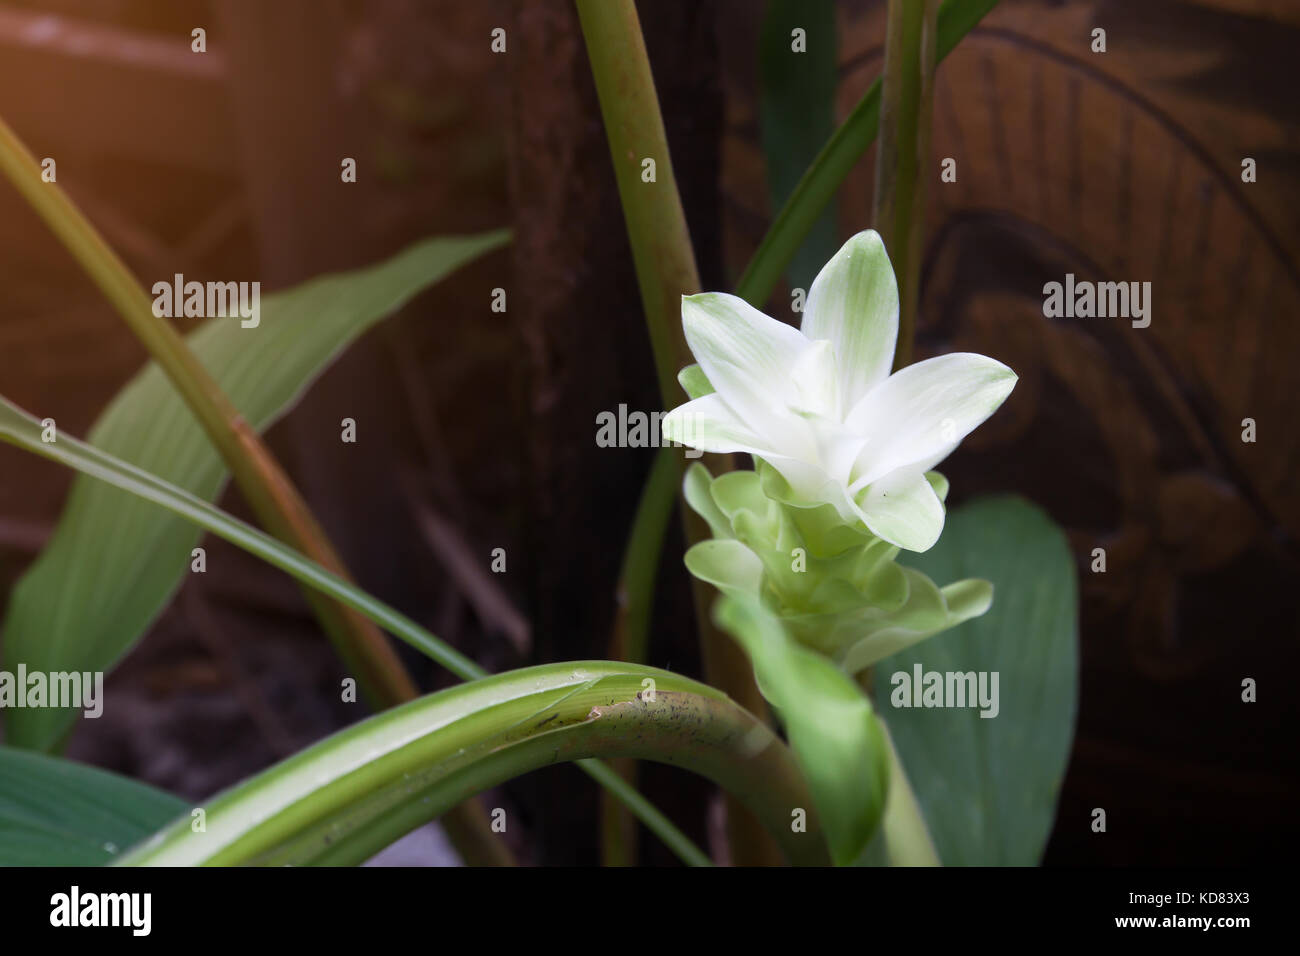 Blooming zingiber bianco fiore in giardino Foto Stock